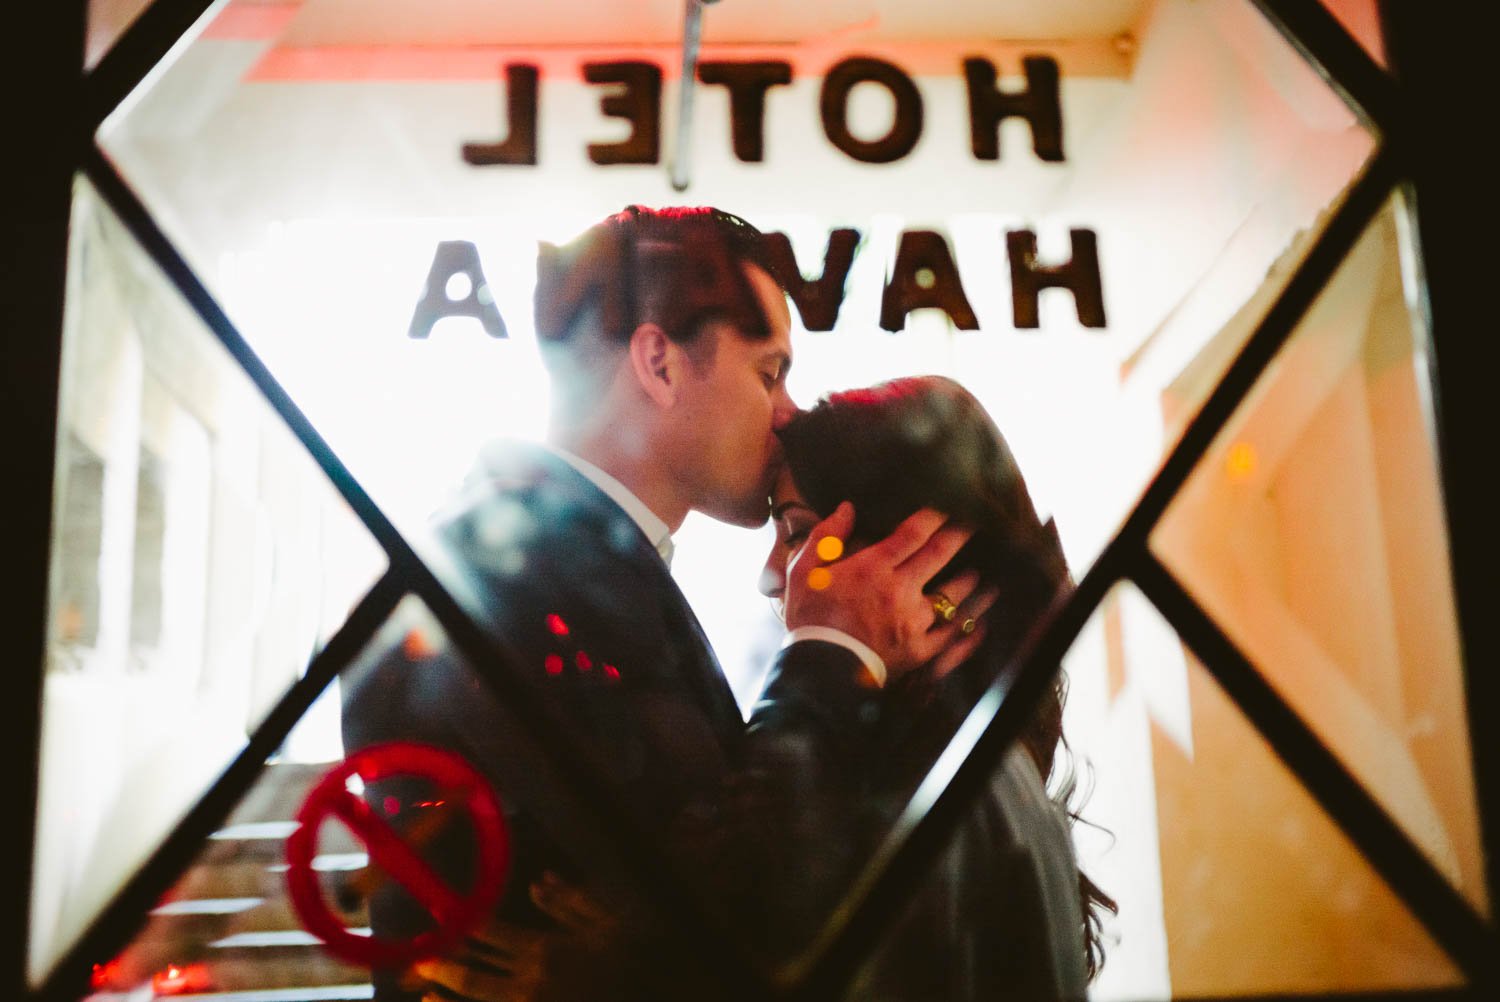 Lorenzo kisses Celina's forehead in Hotel Havana bar window Downtown San Antonio Engagement photos-04